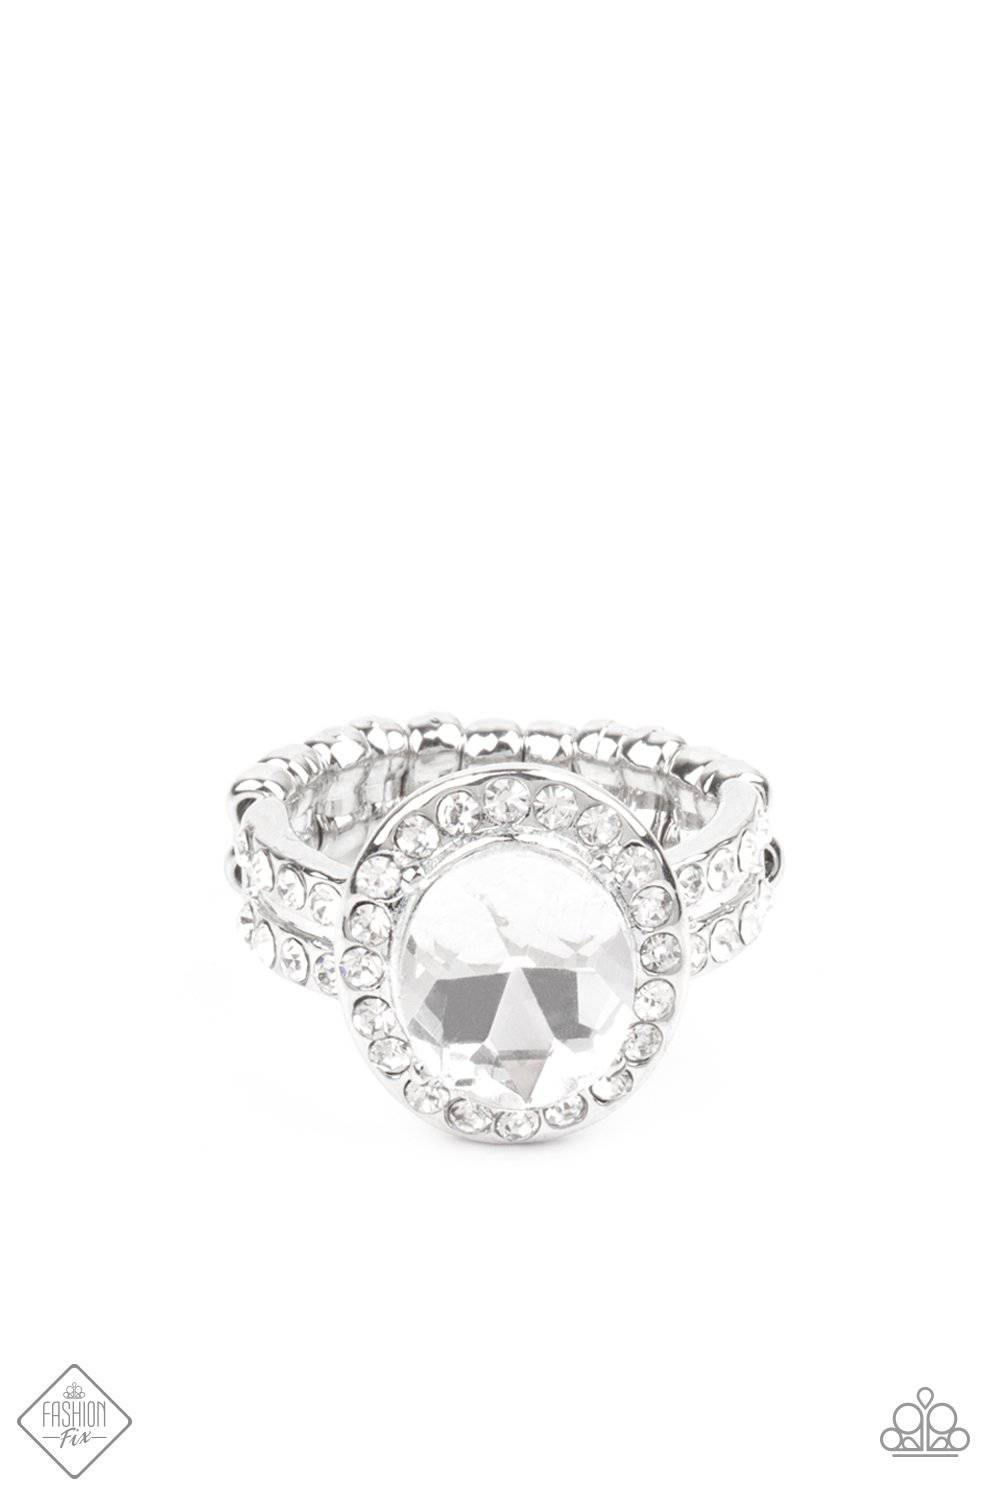 Unstoppable Sparkle - White Rhinestone Ring - Paparazzi Accessories - GlaMarous Titi Jewels